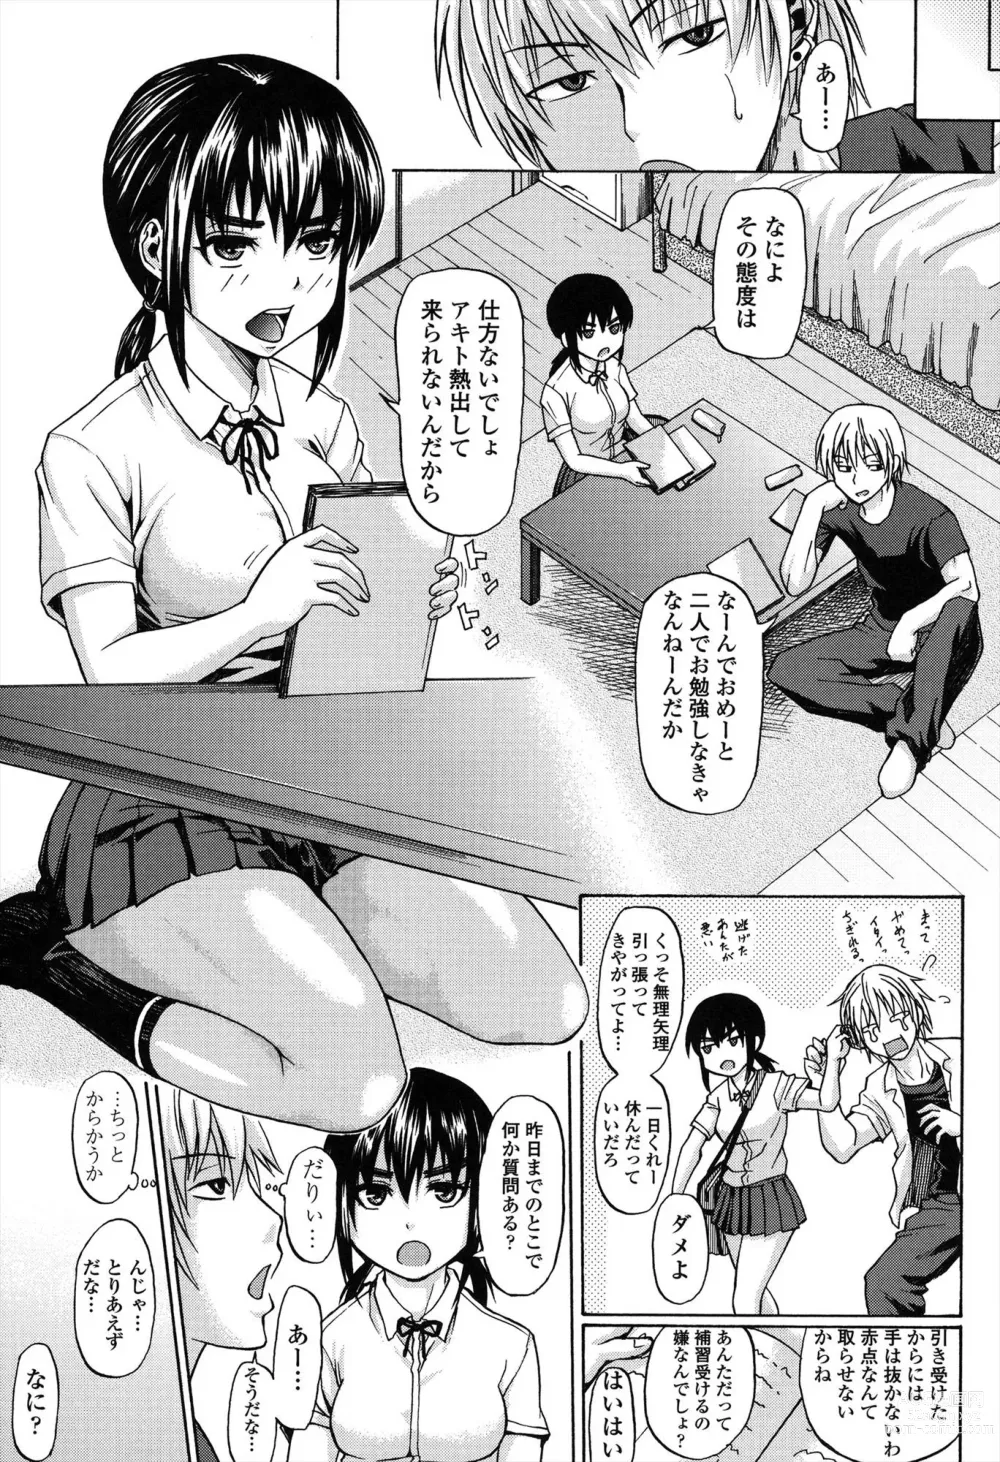 Page 5 of manga Repeat Libido